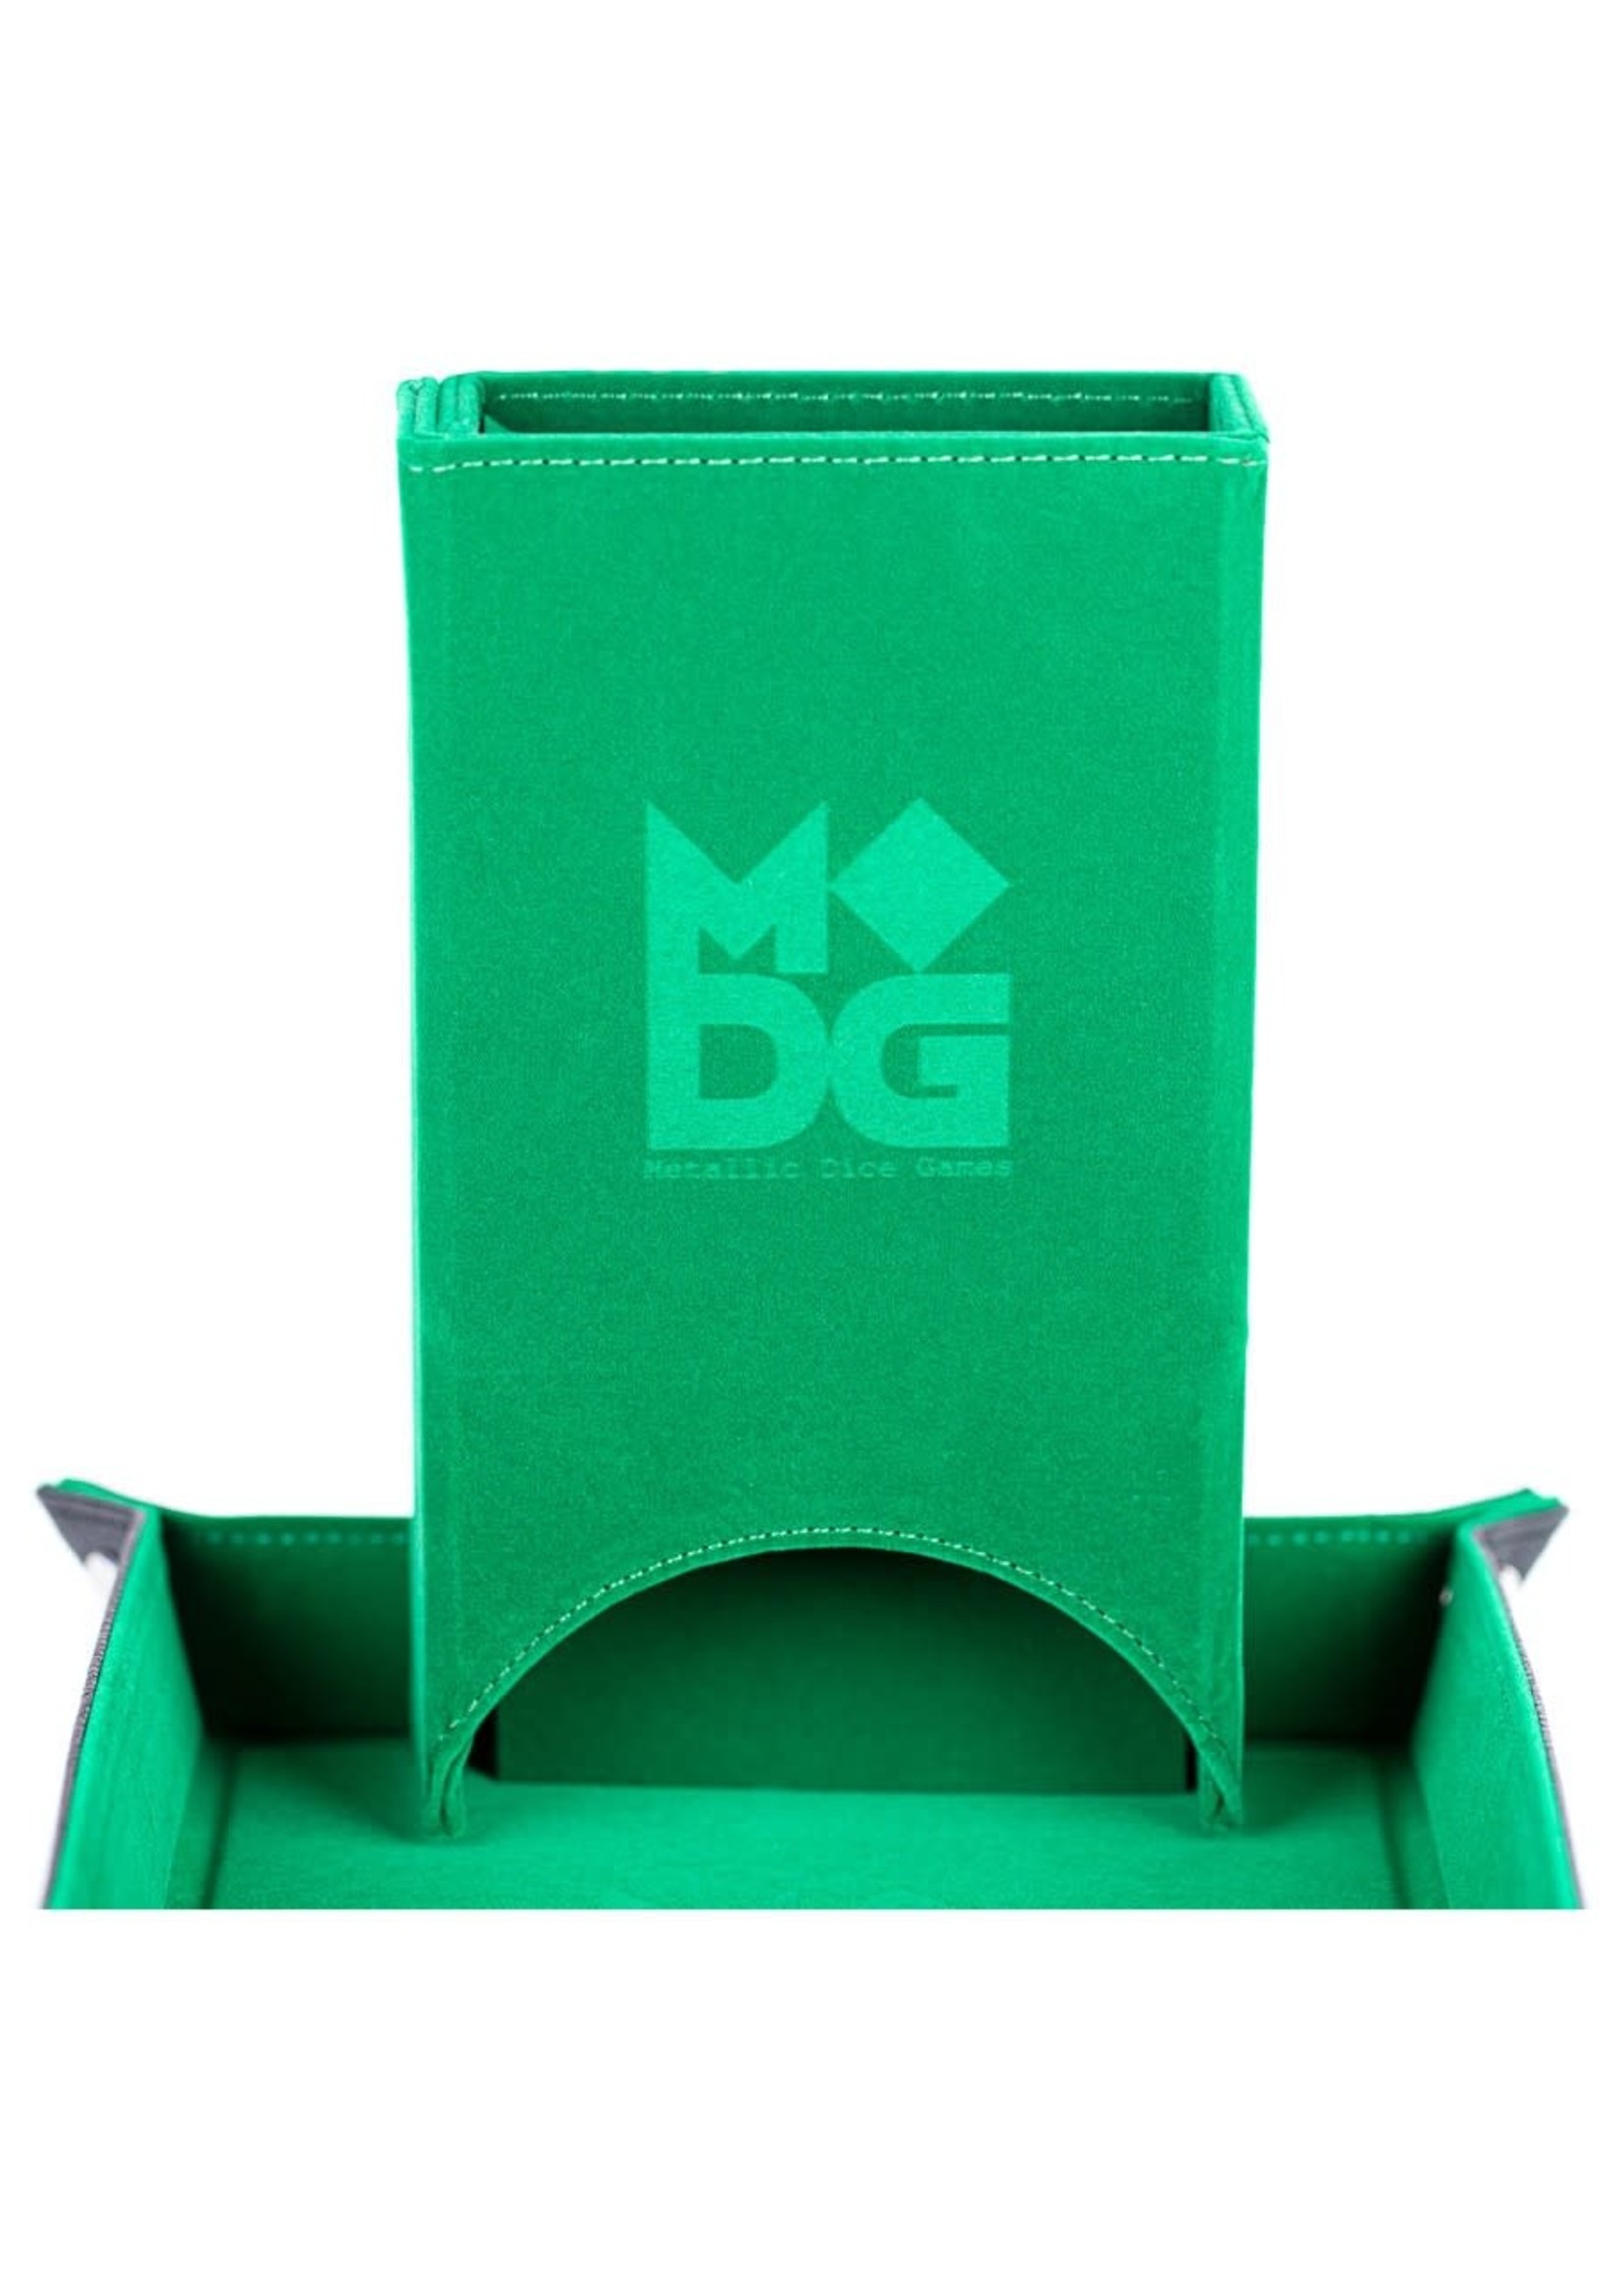 Metallic Dice Game Dice Tower: Velvet Fold Green